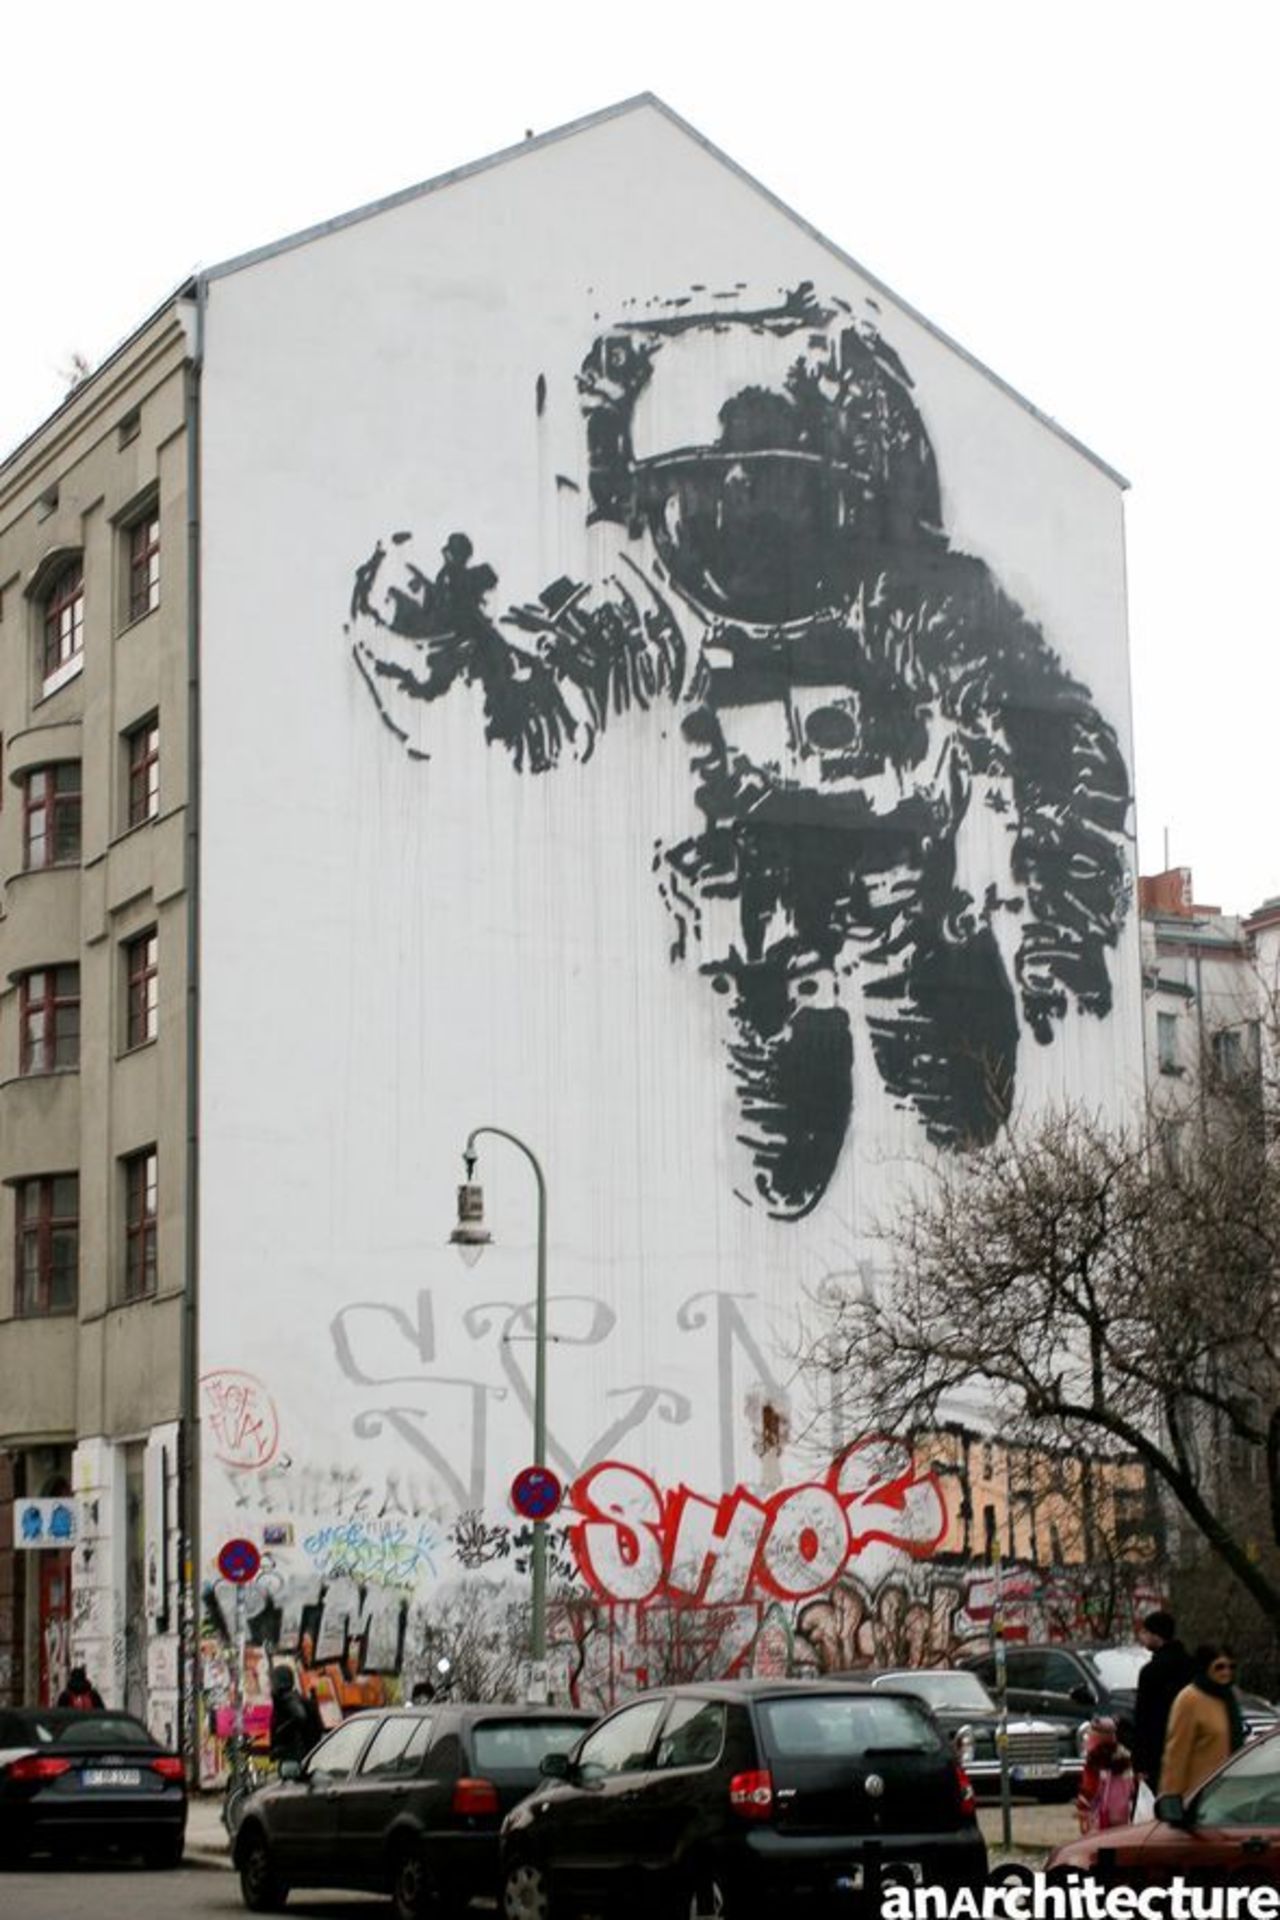 The Kosmonaut in Berlin by Victor Ash#streetart #mural #graffiti #art https://t.co/XGV3dxY3gW